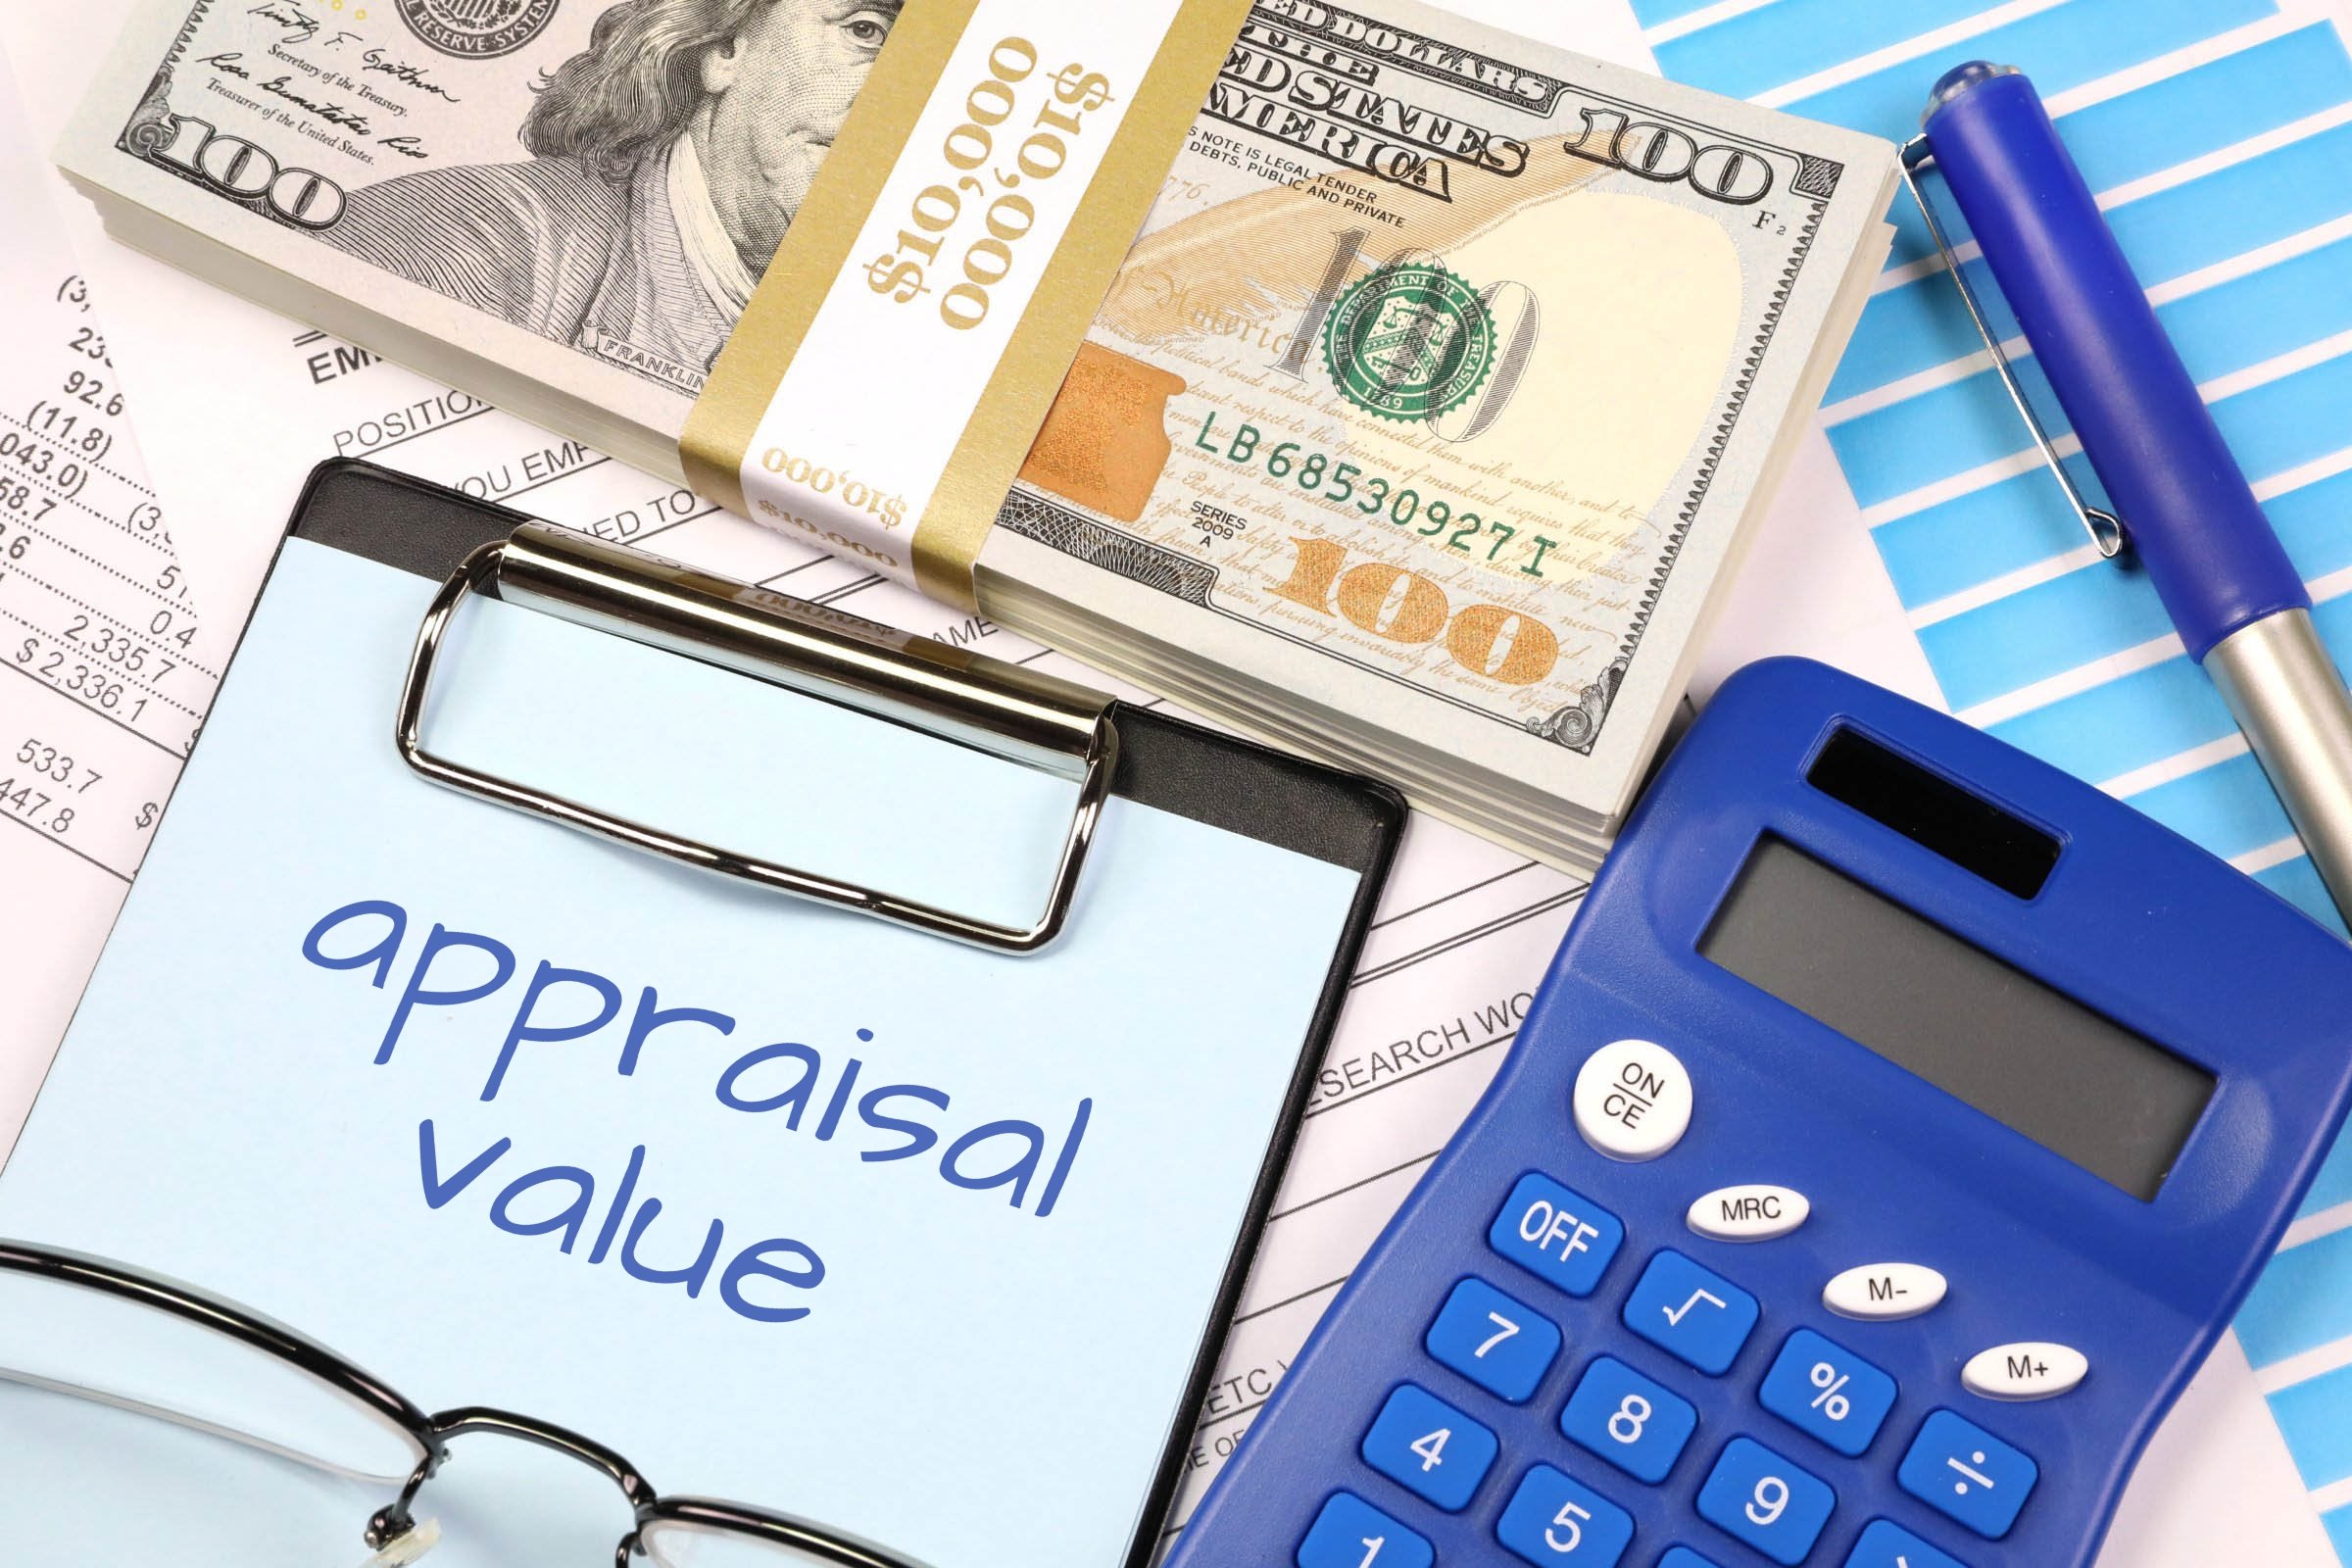 Appraisal Value